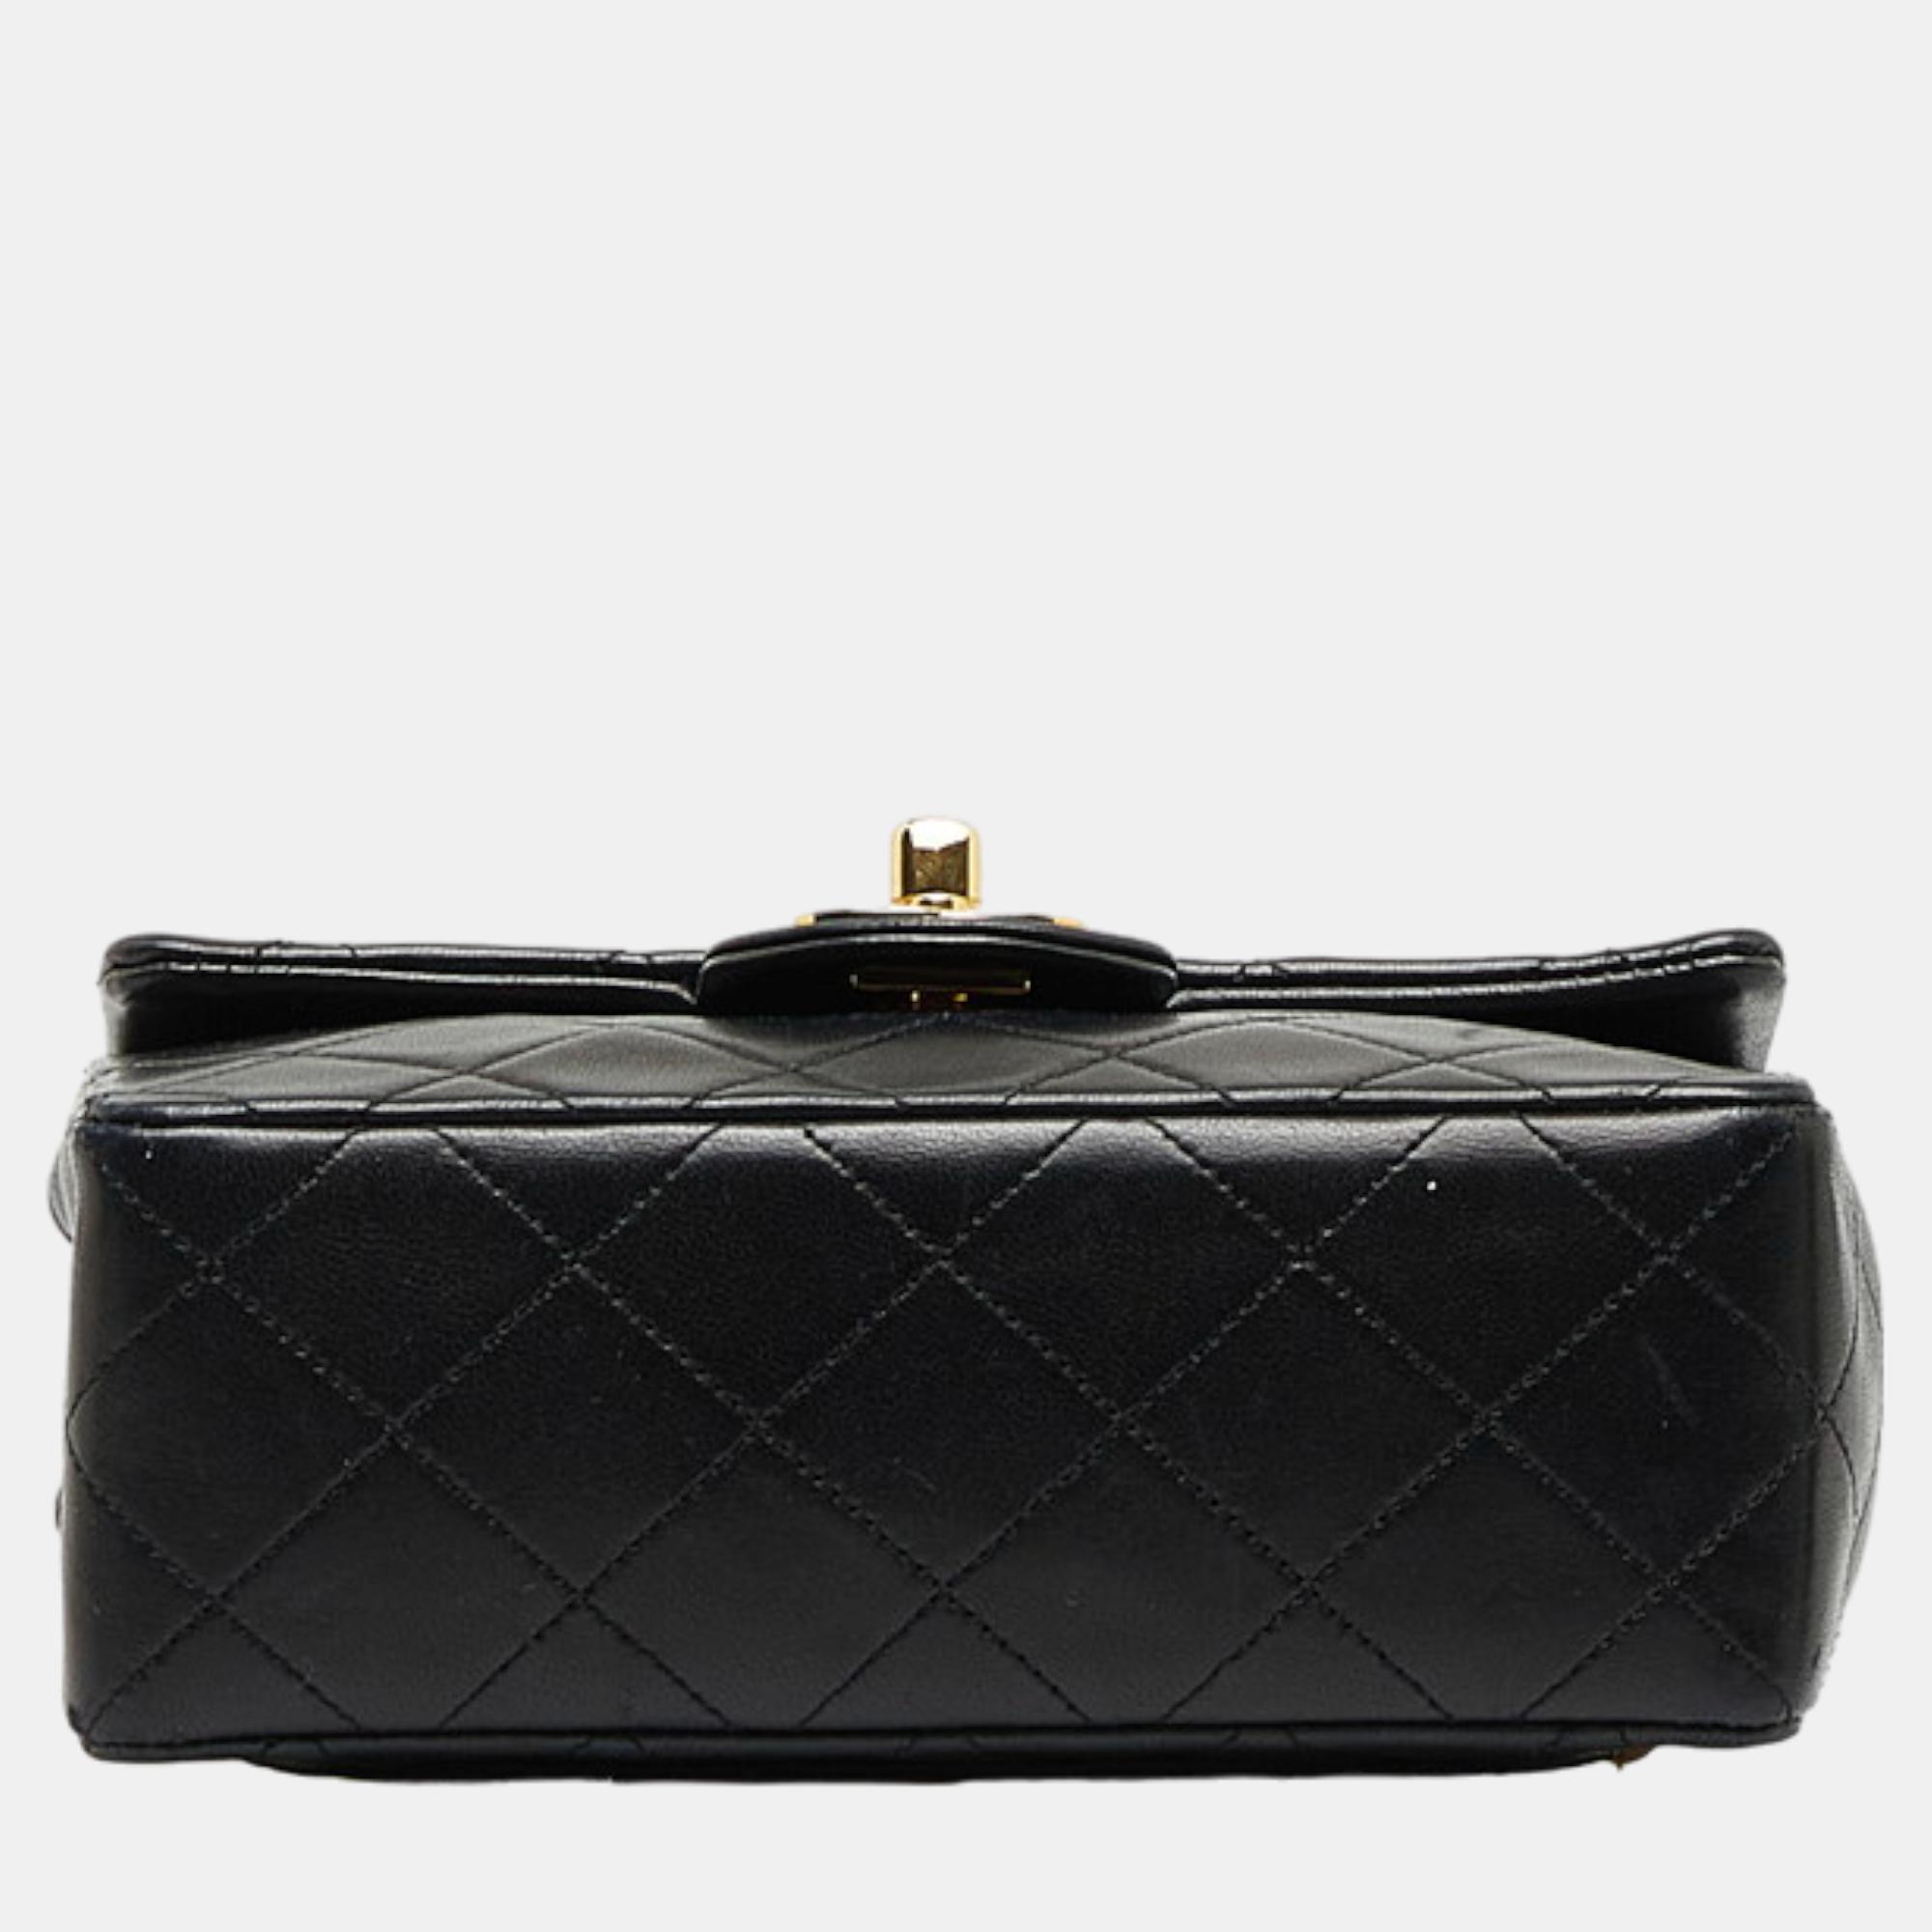 Chanel Black Leather Mini Classic Single Flap Bag